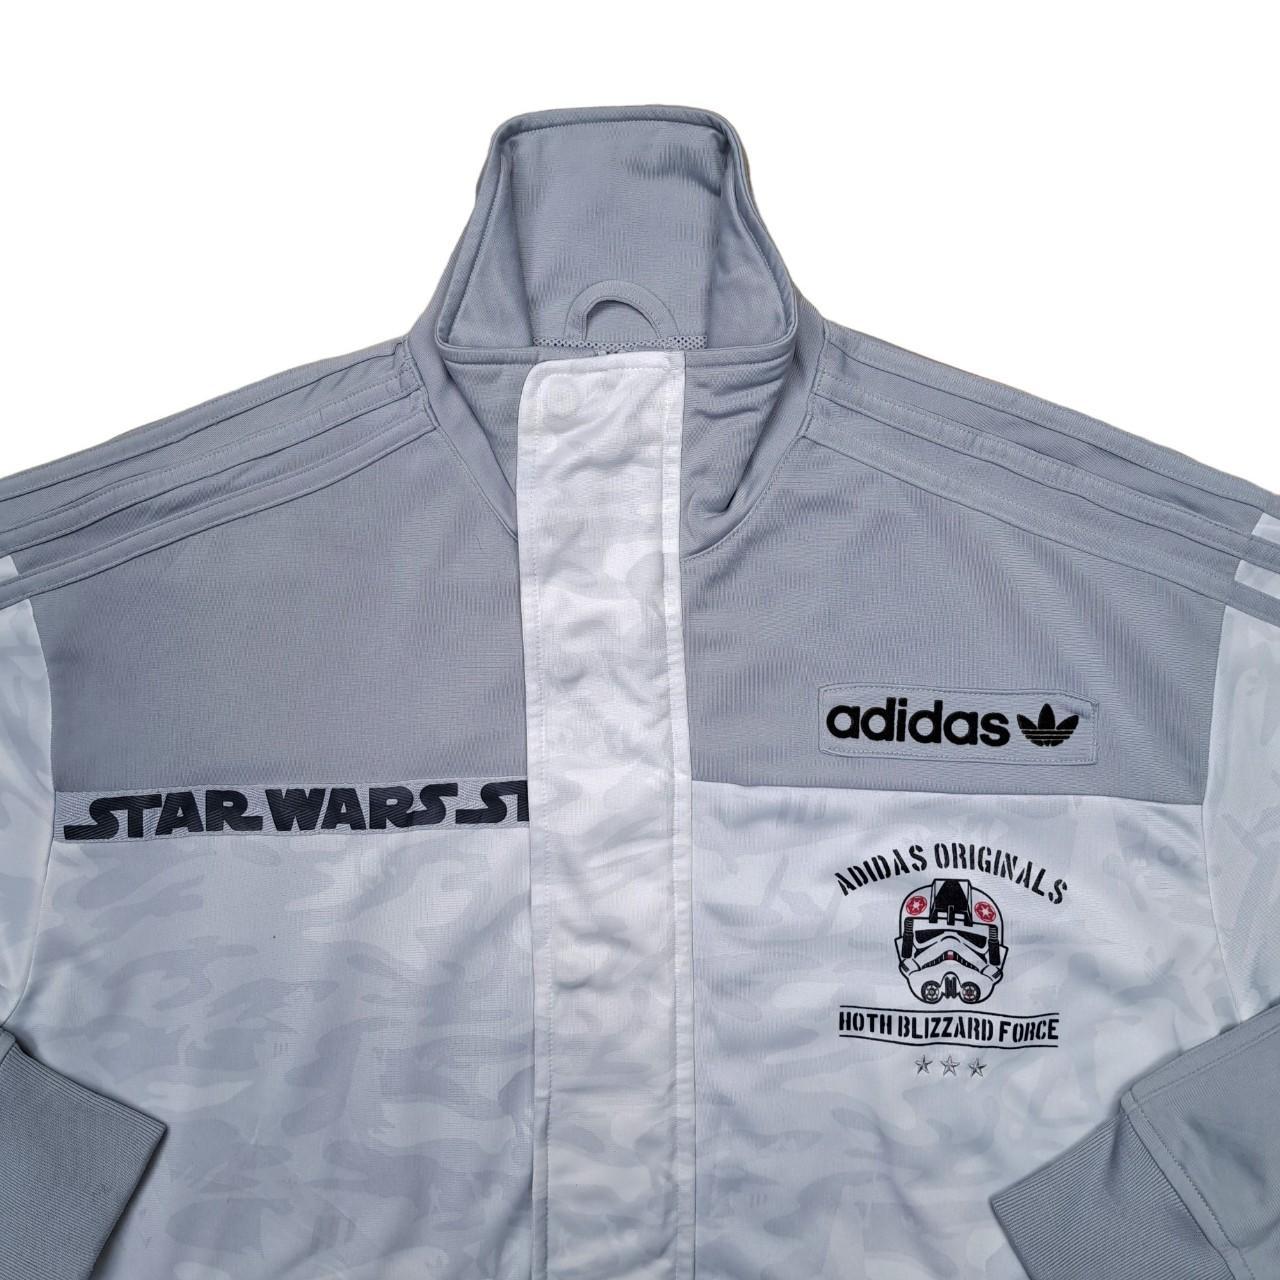 Adidas Originals Star Wars Stormtrooper Jacket